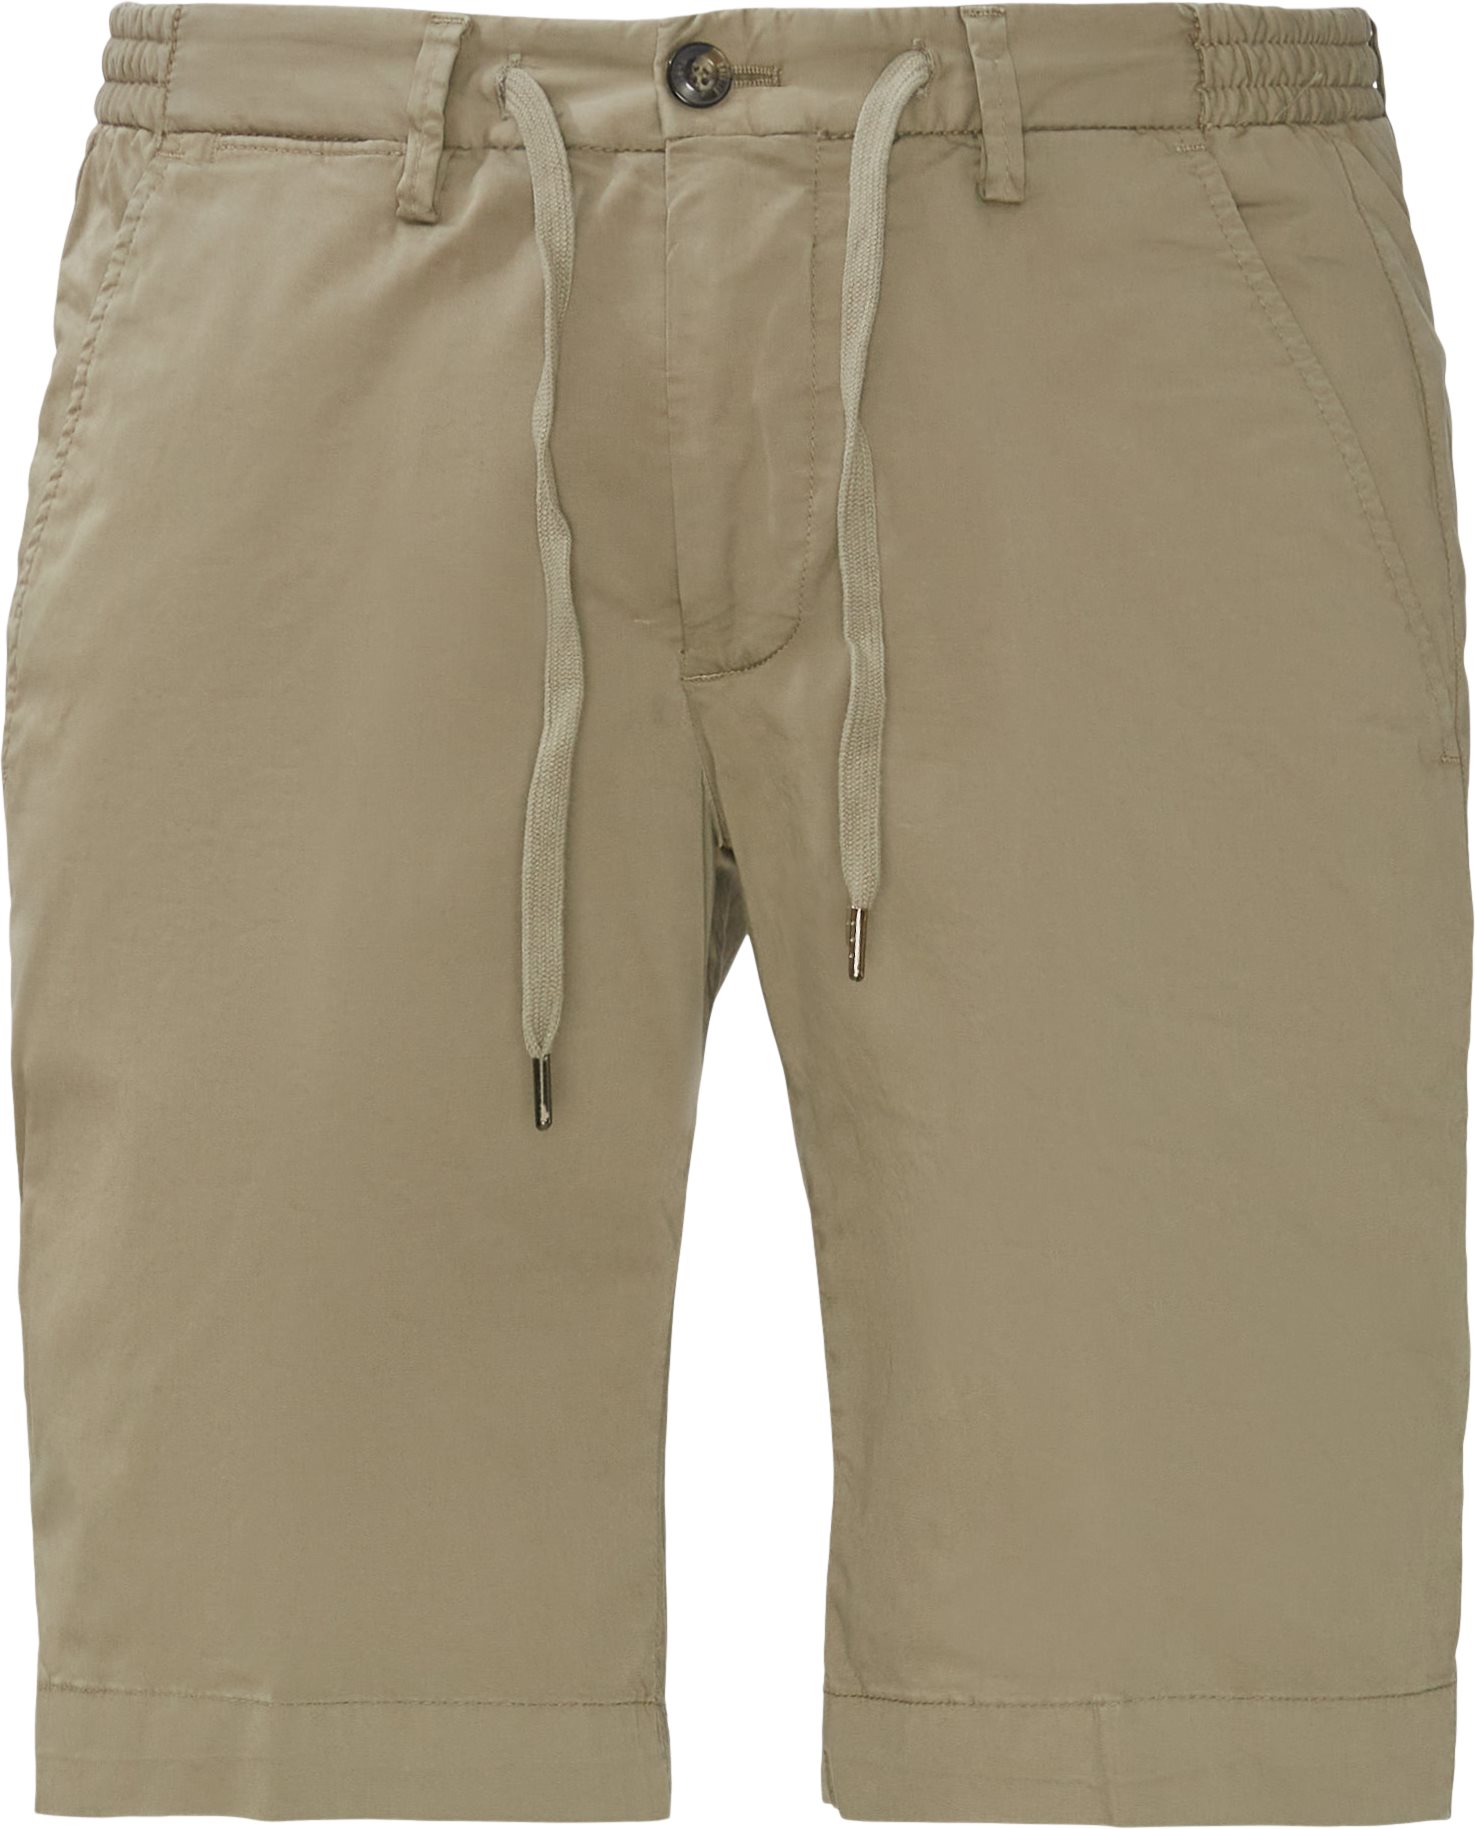 Shorts - Regular fit - Sand